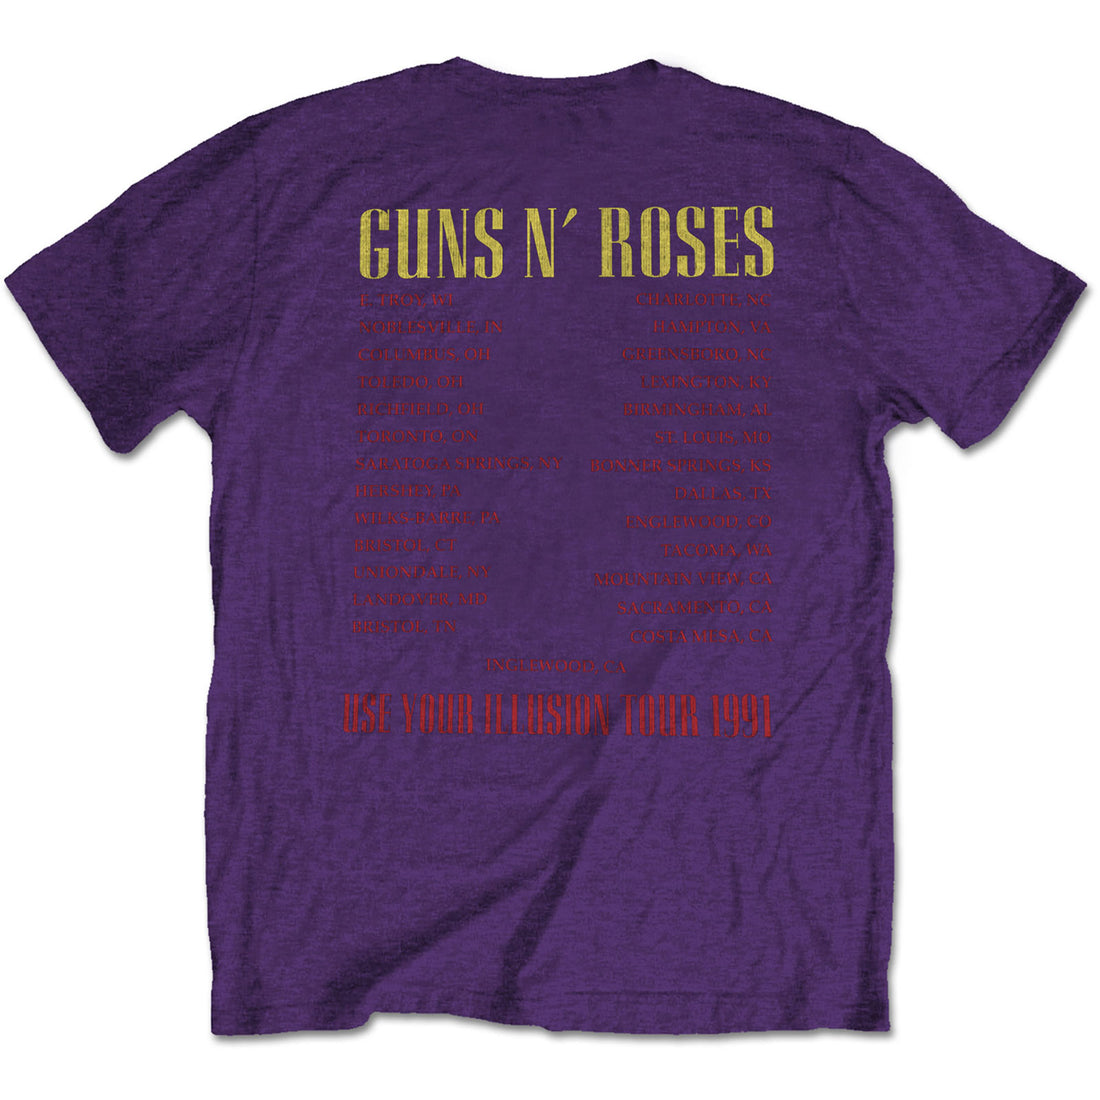 Guns N' Roses Unisex T-Shirt: Skull Circle (Back Print)